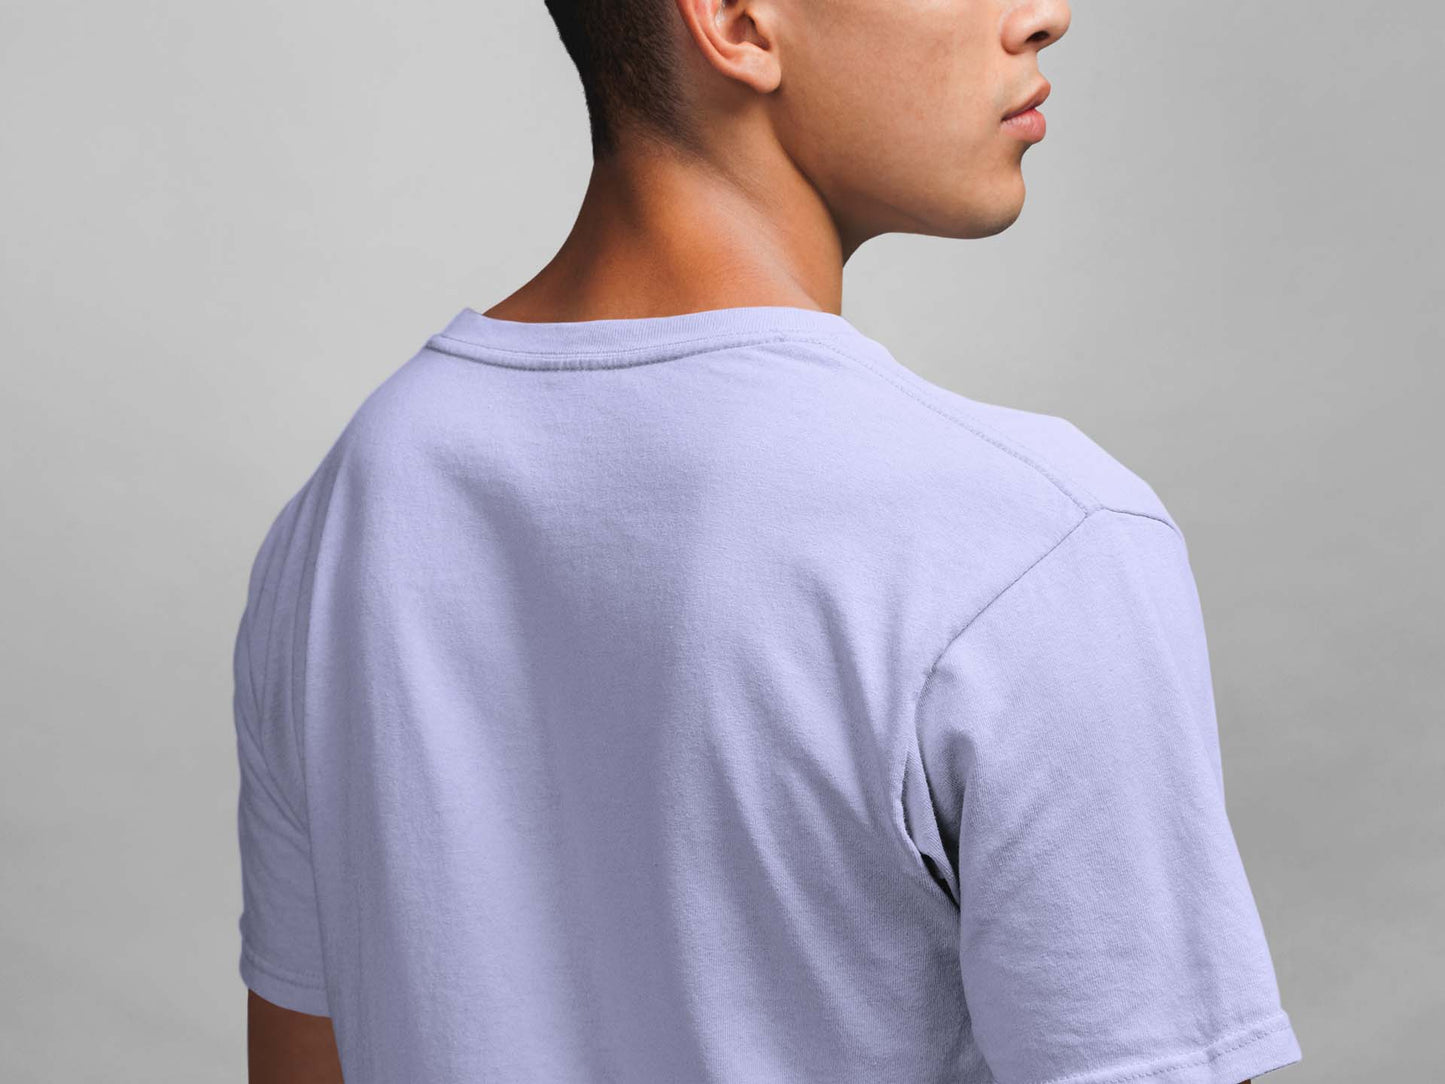 Lavender Plain T Shirt Men